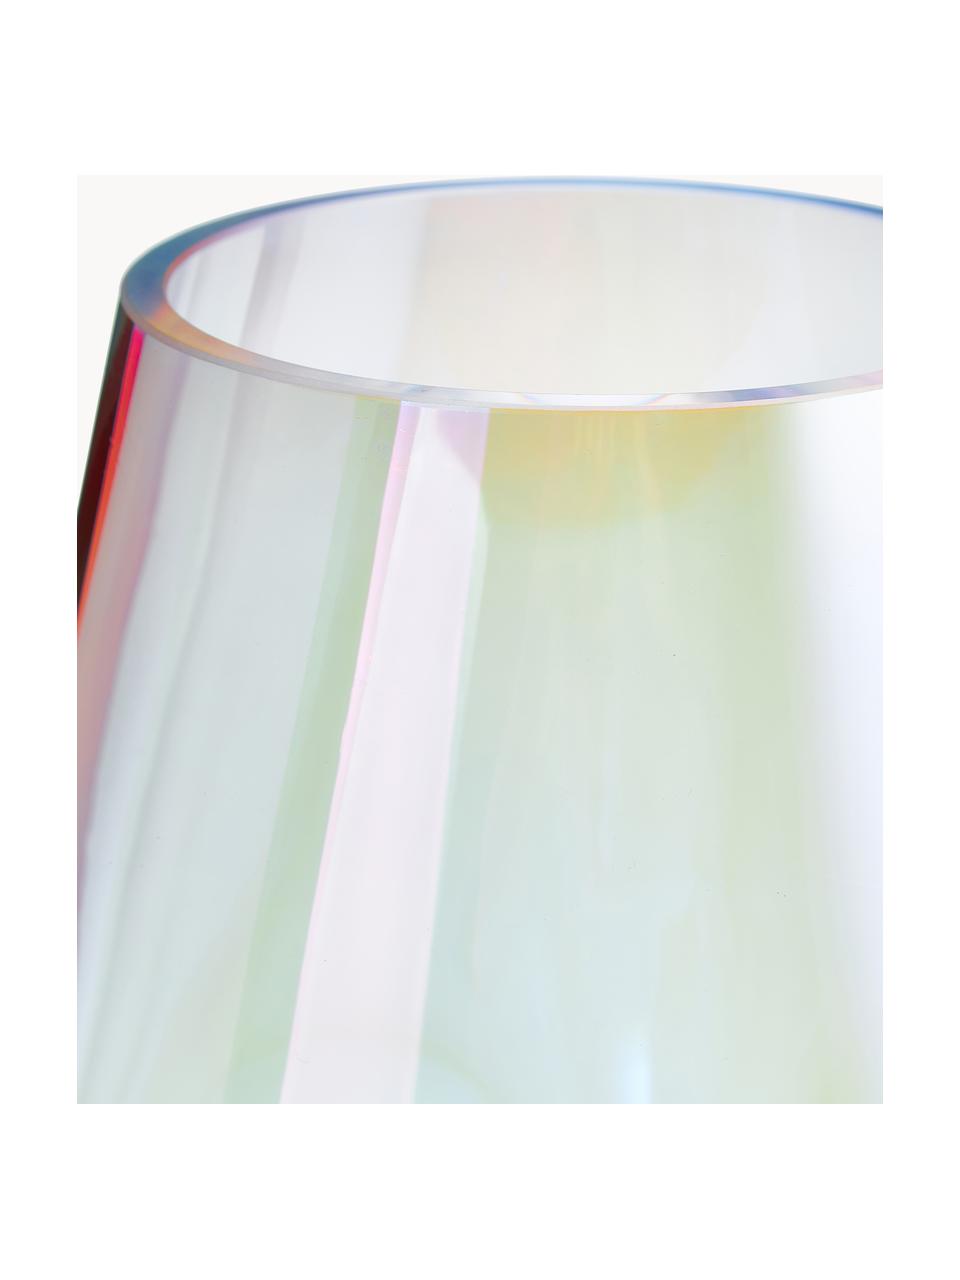 Vaso grande in vetro soffiato Rainbow, alt. 35 cm, Vetro soffiato, Multicolore, iridescente, Ø 20 x Alt. 35 cm